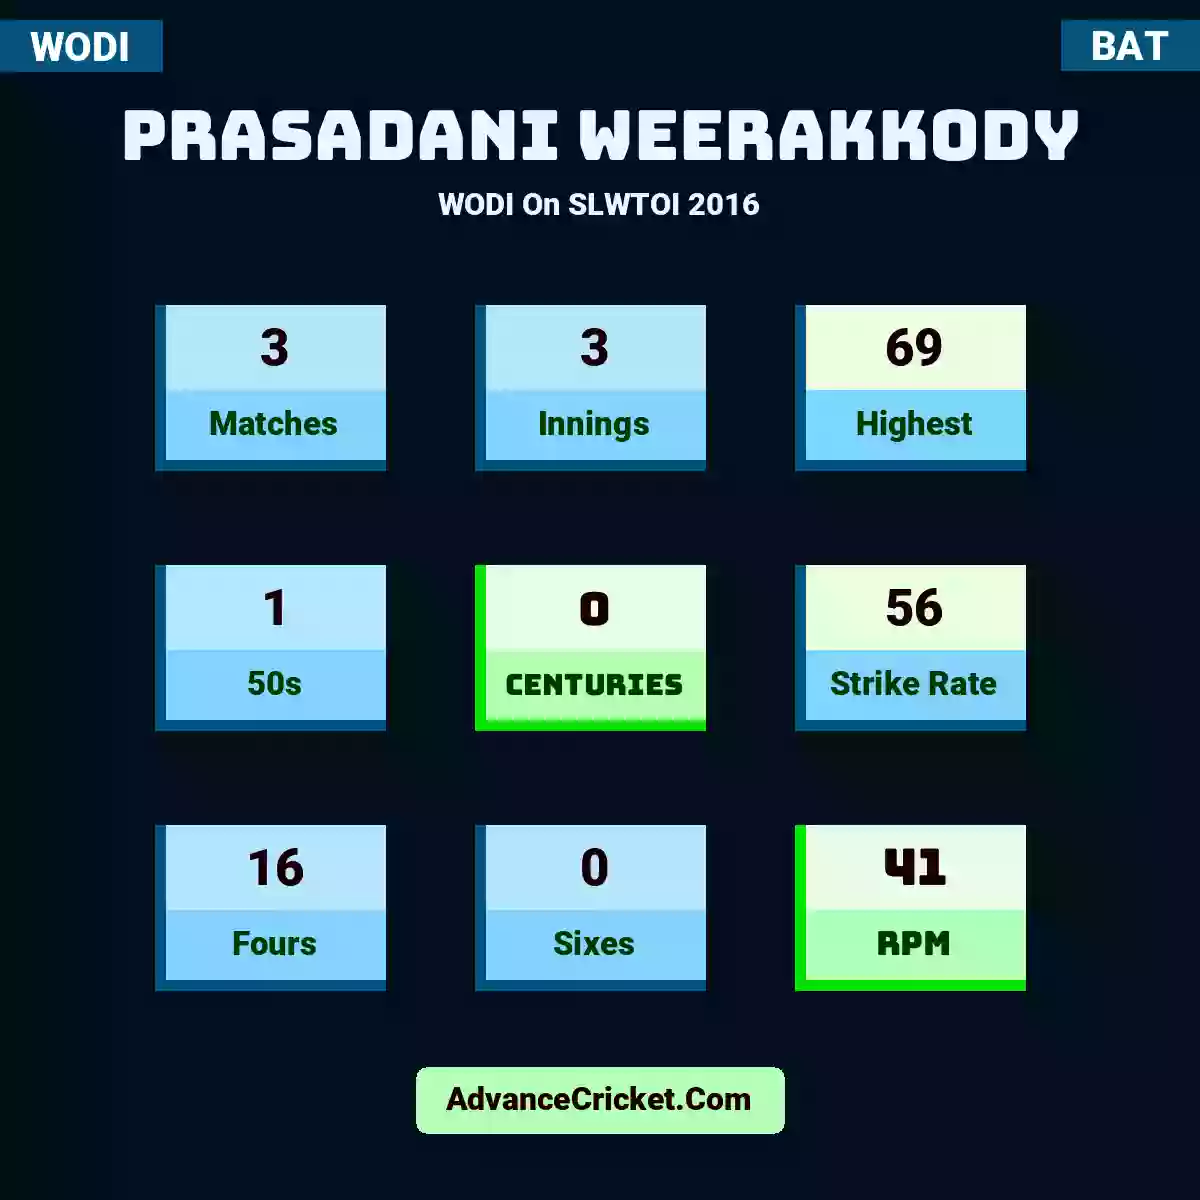 Prasadani Weerakkody WODI  On SLWTOI 2016, Prasadani Weerakkody played 3 matches, scored 69 runs as highest, 1 half-centuries, and 0 centuries, with a strike rate of 56. P.Weerakkody hit 16 fours and 0 sixes, with an RPM of 41.